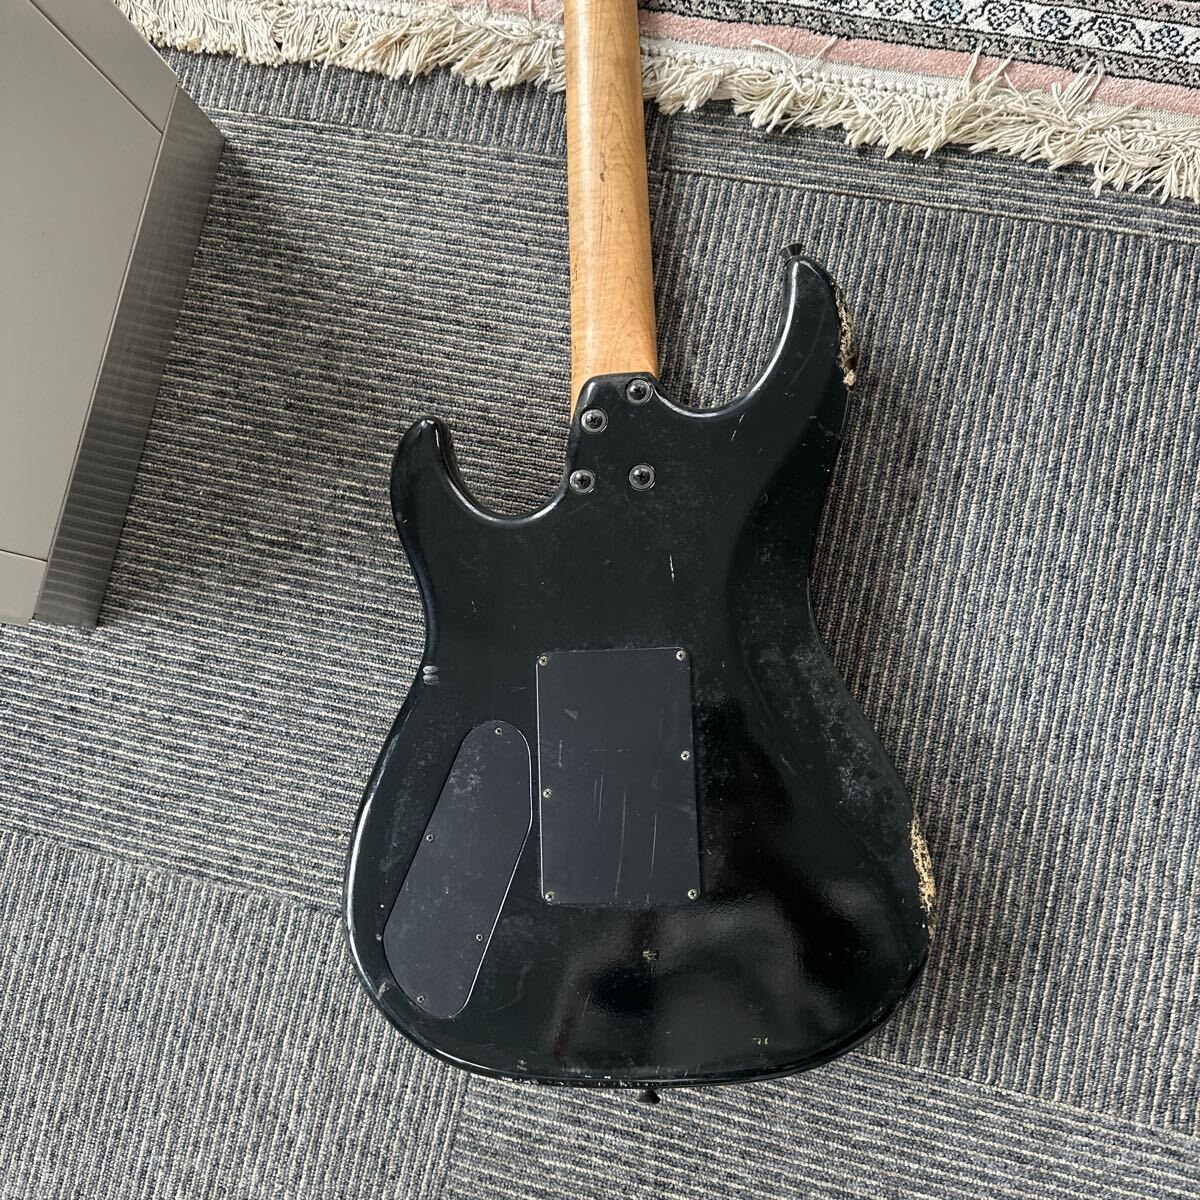  used guitar 